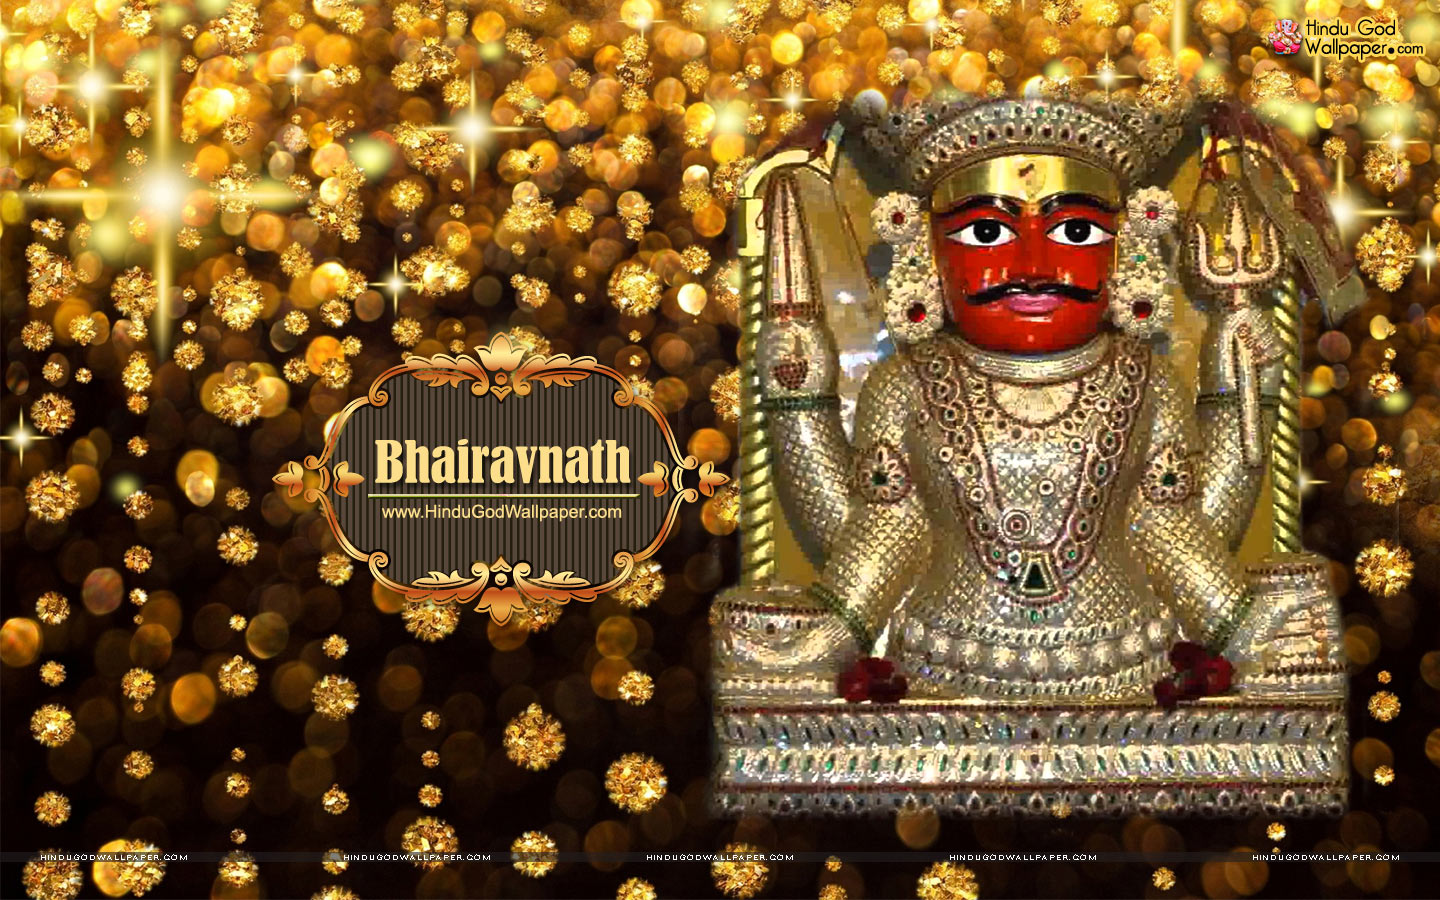 Bhairavnath